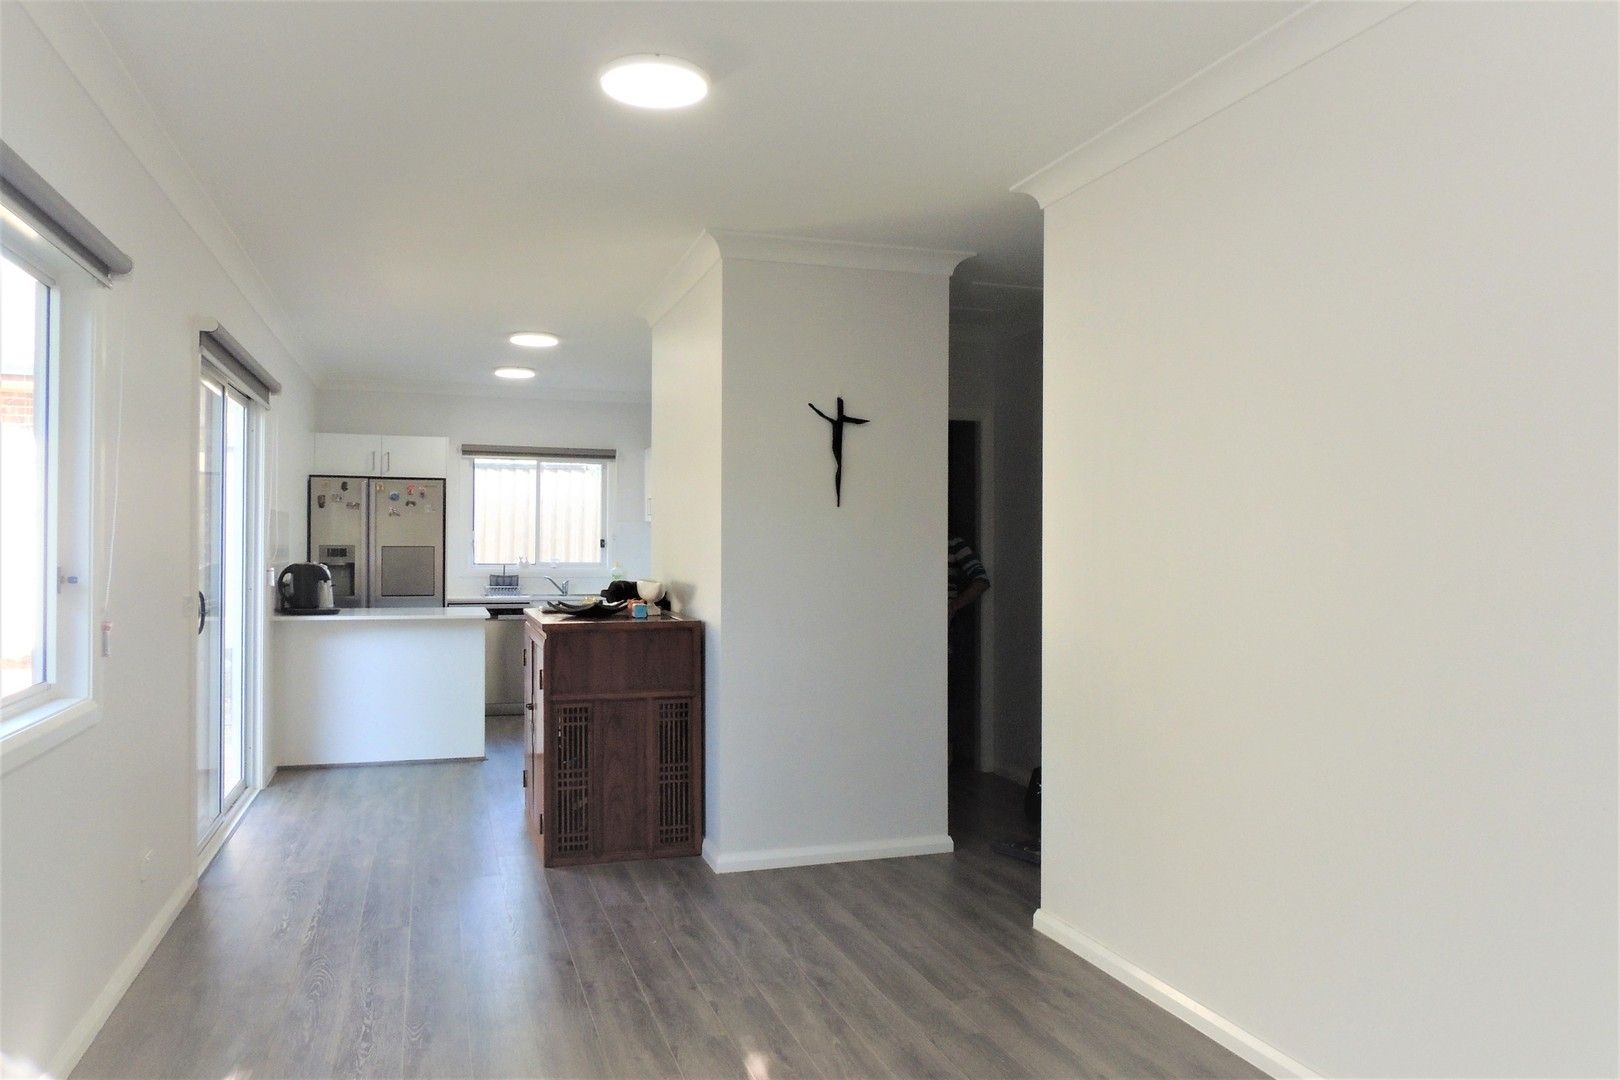 2 bedrooms Apartment / Unit / Flat in 2-8A Hardwicke Street RIVERWOOD NSW, 2210